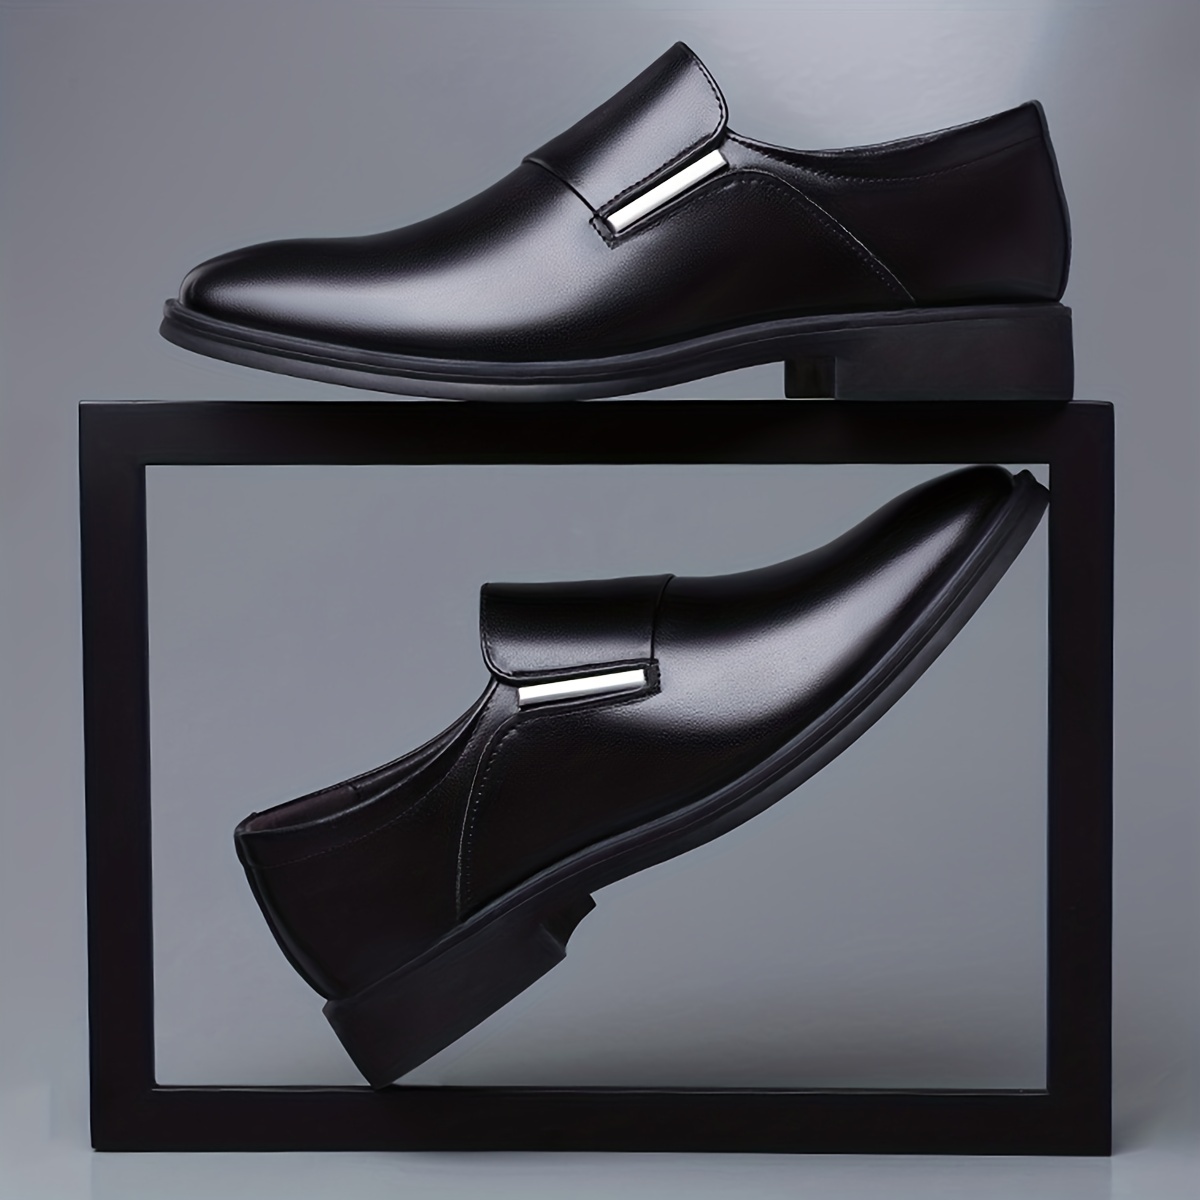 Zapatos Vestir Hombre, Calzado Oxford Antideslizantes Duraderos, Zapatos  Formales Bodas, Fiestas Negocios, Servicio Cliente 24/7